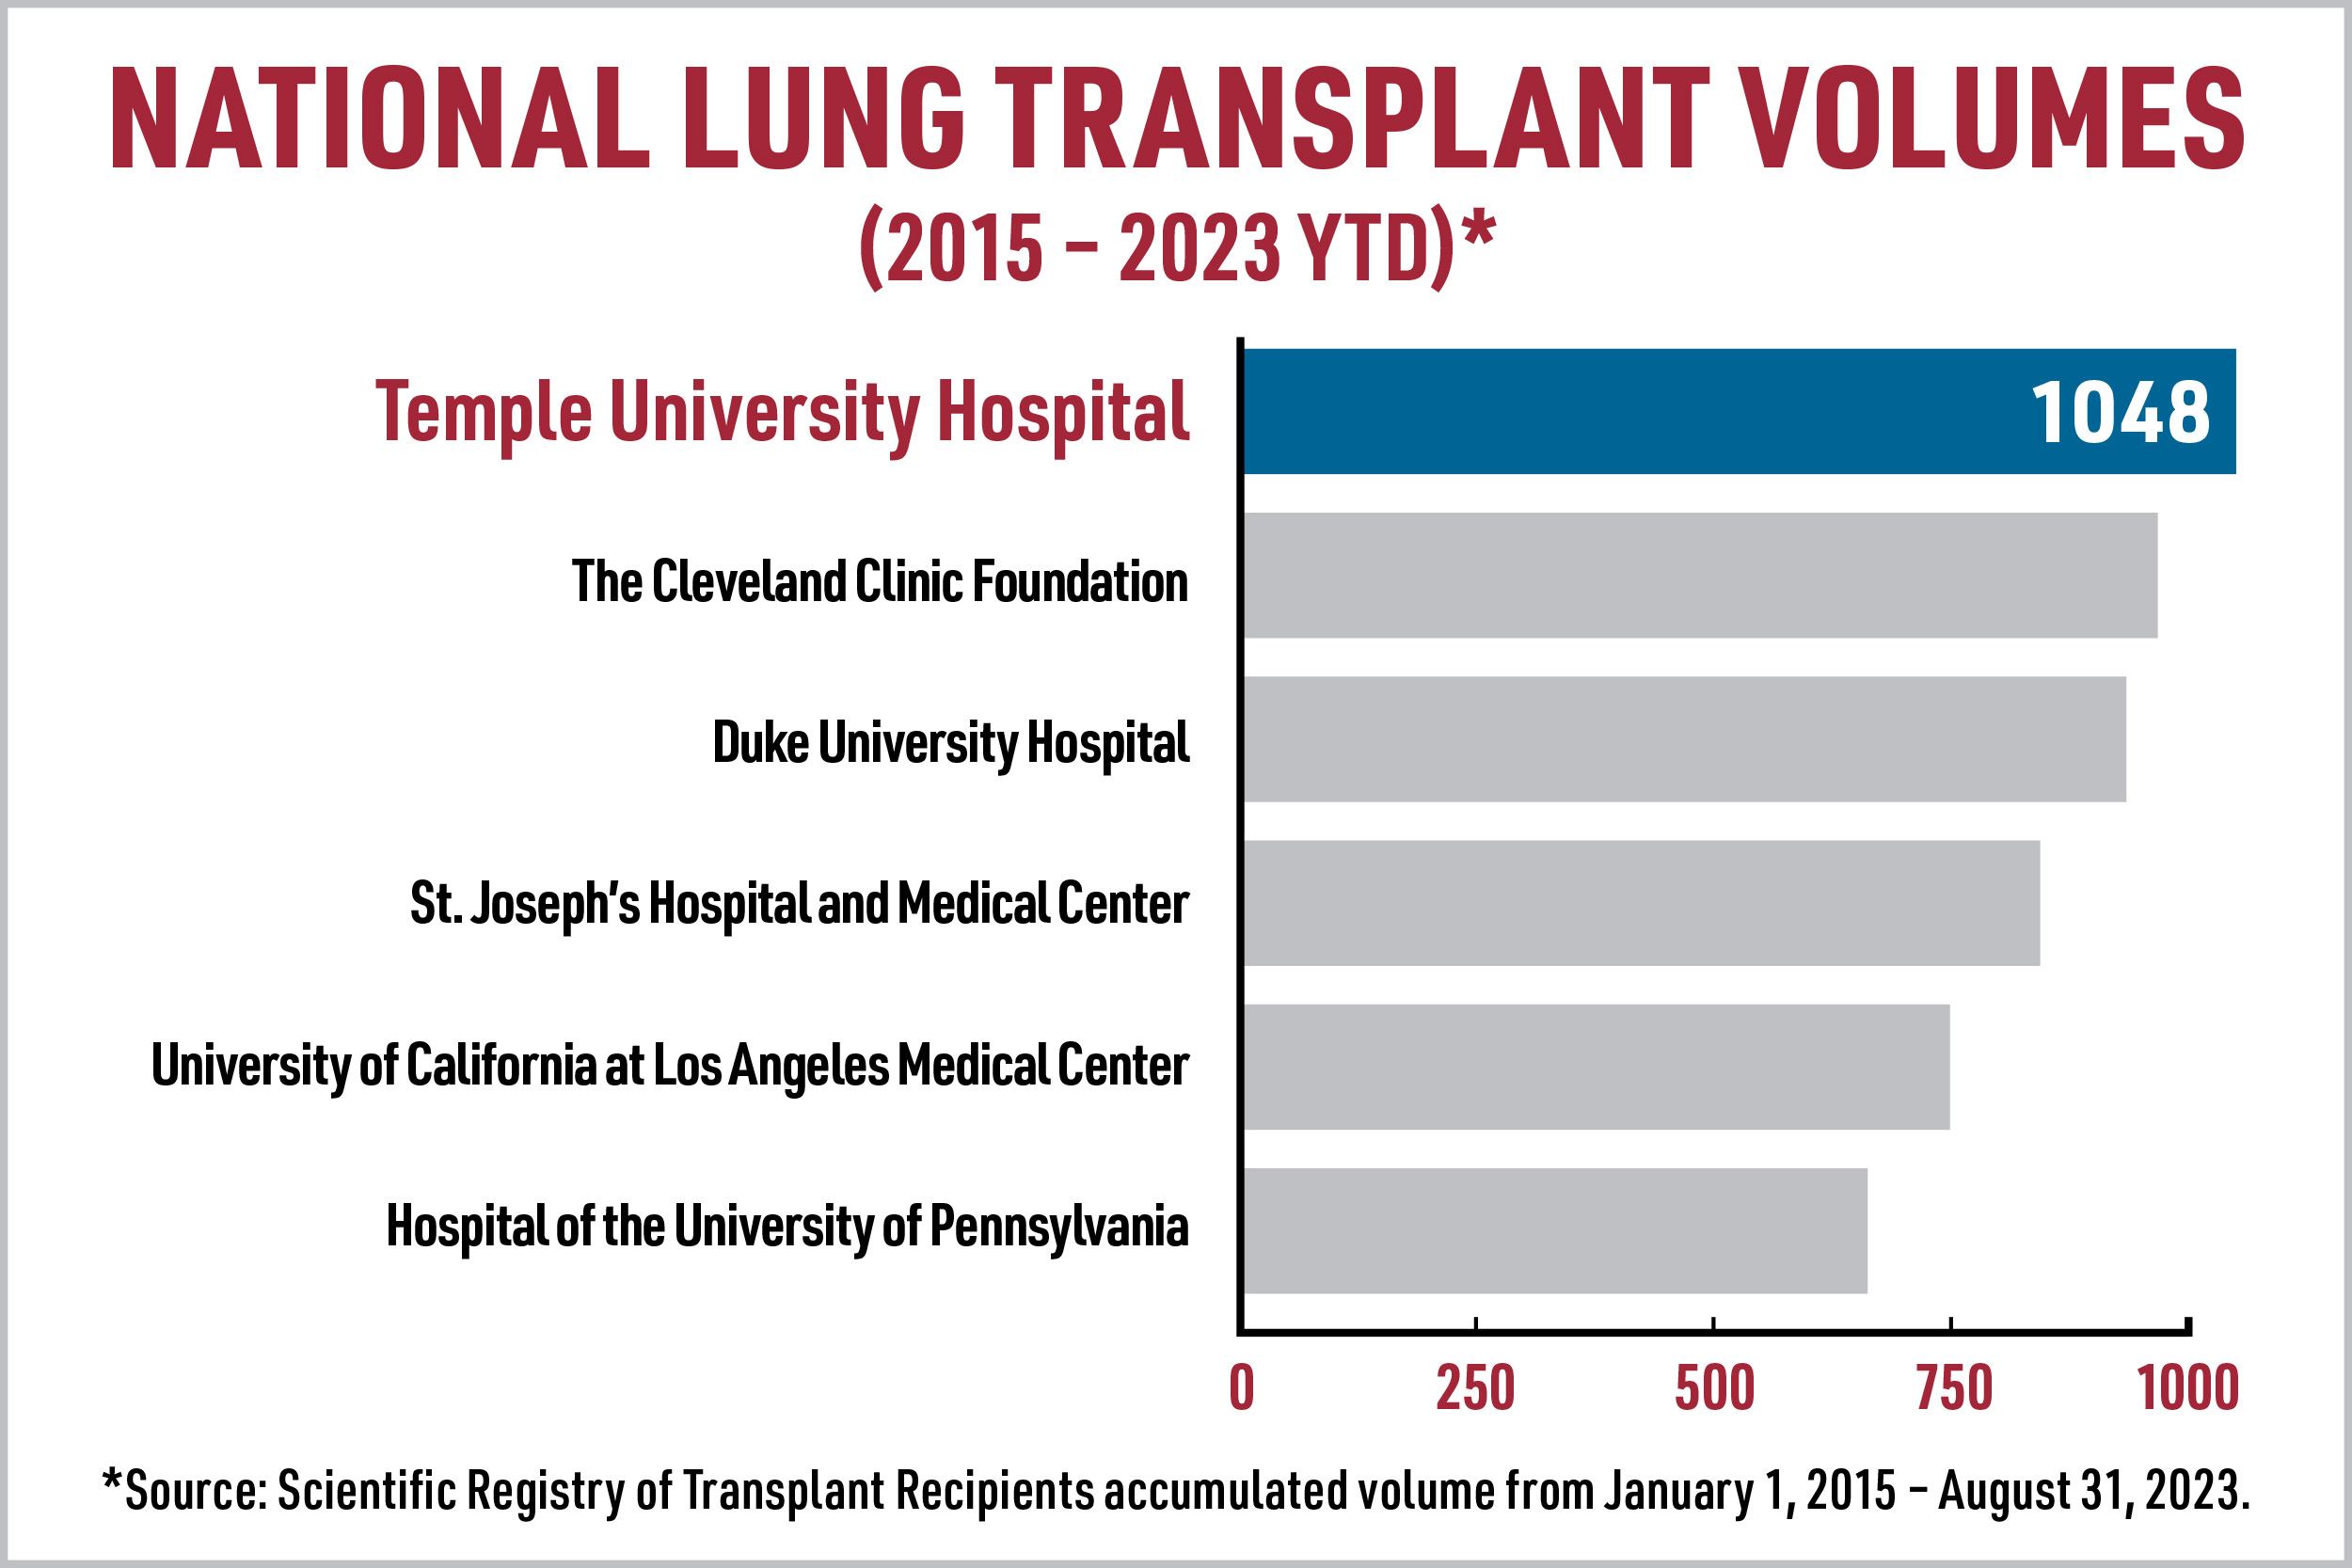 national lung transplant volumes: temple hospital 1048, national leader 2015-2023